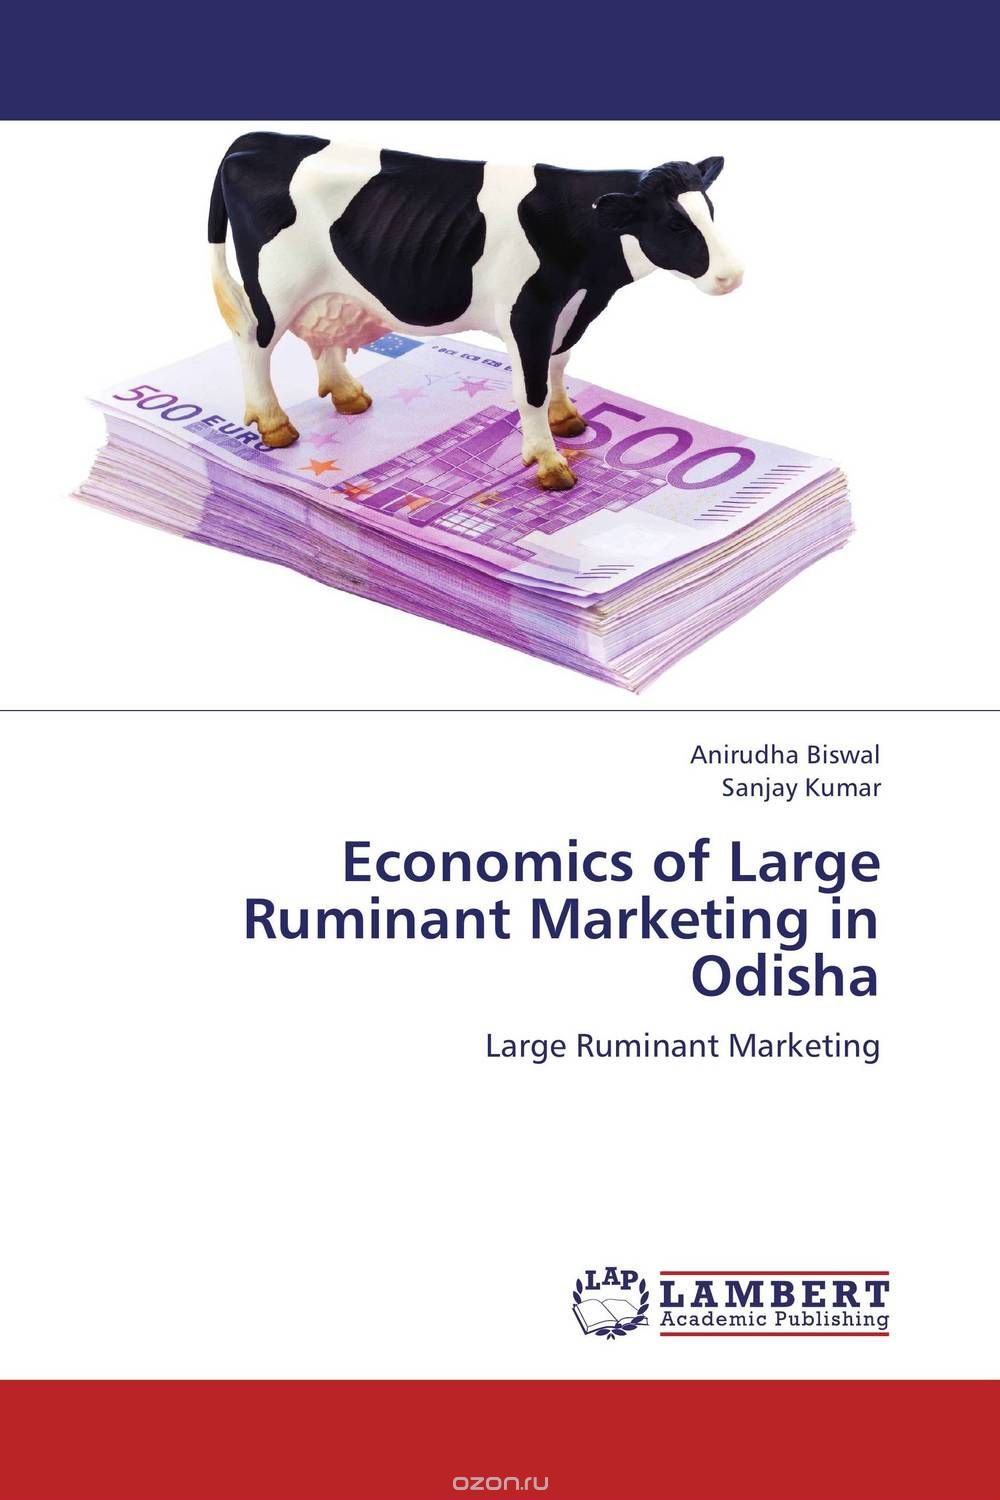 Скачать книгу "Economics of Large Ruminant Marketing in Odisha"